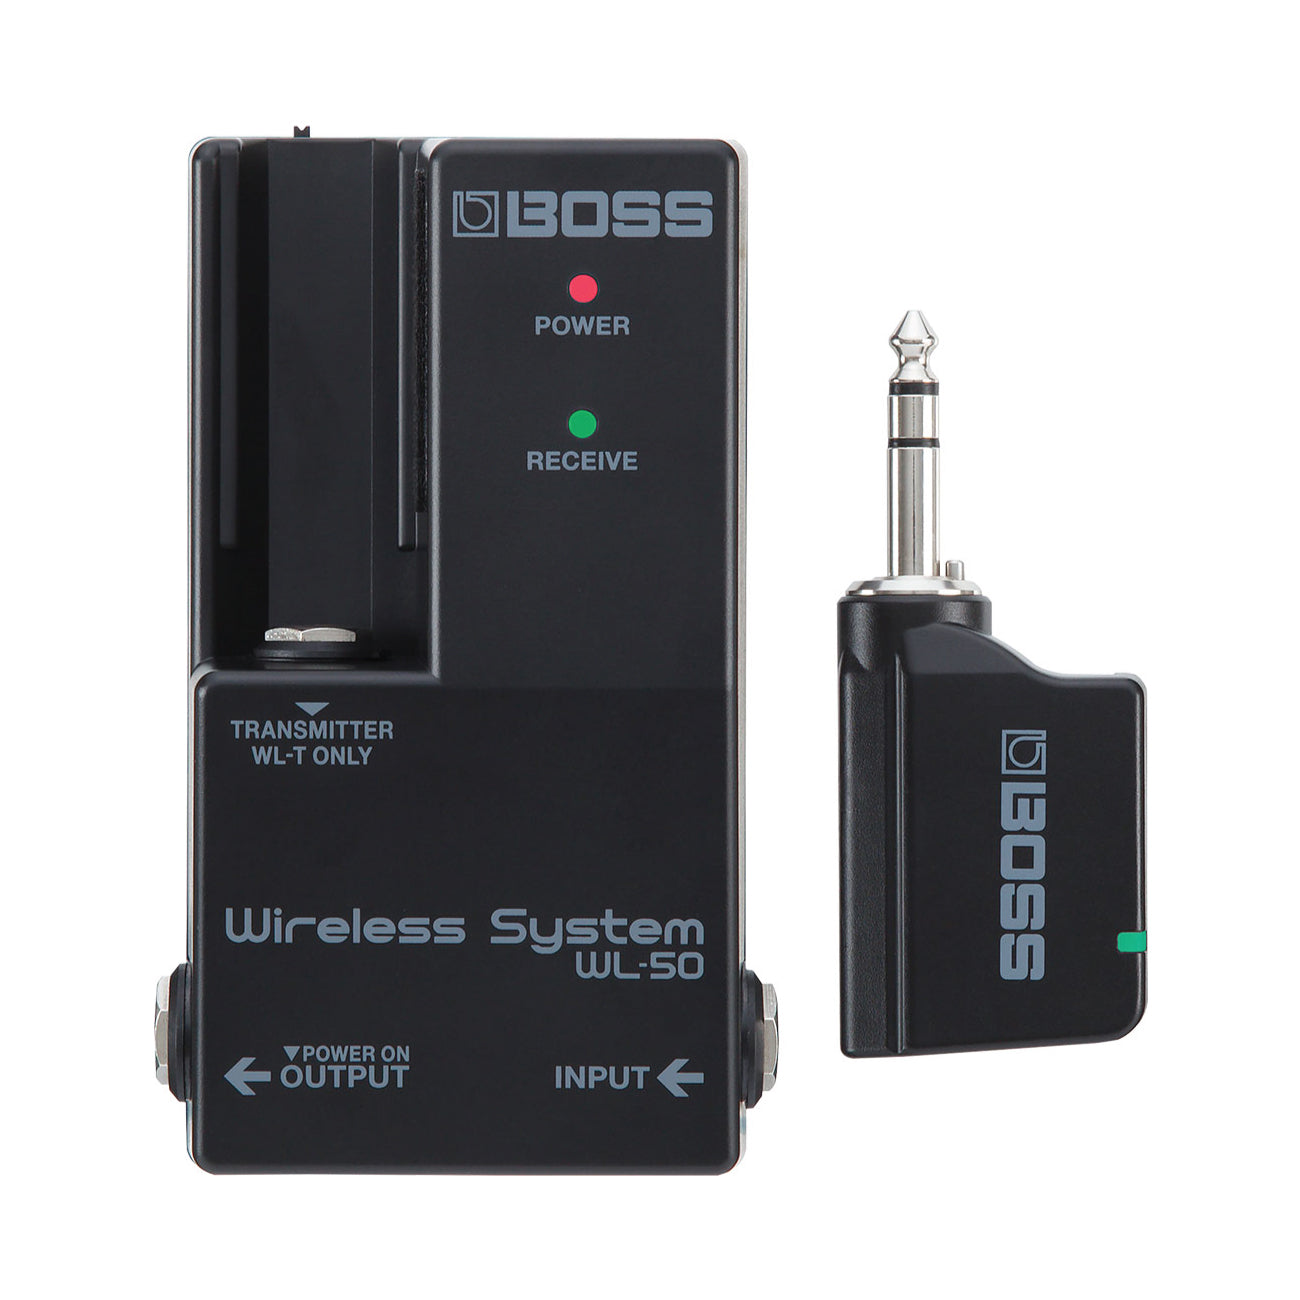 BOSS WL50 Wireless System